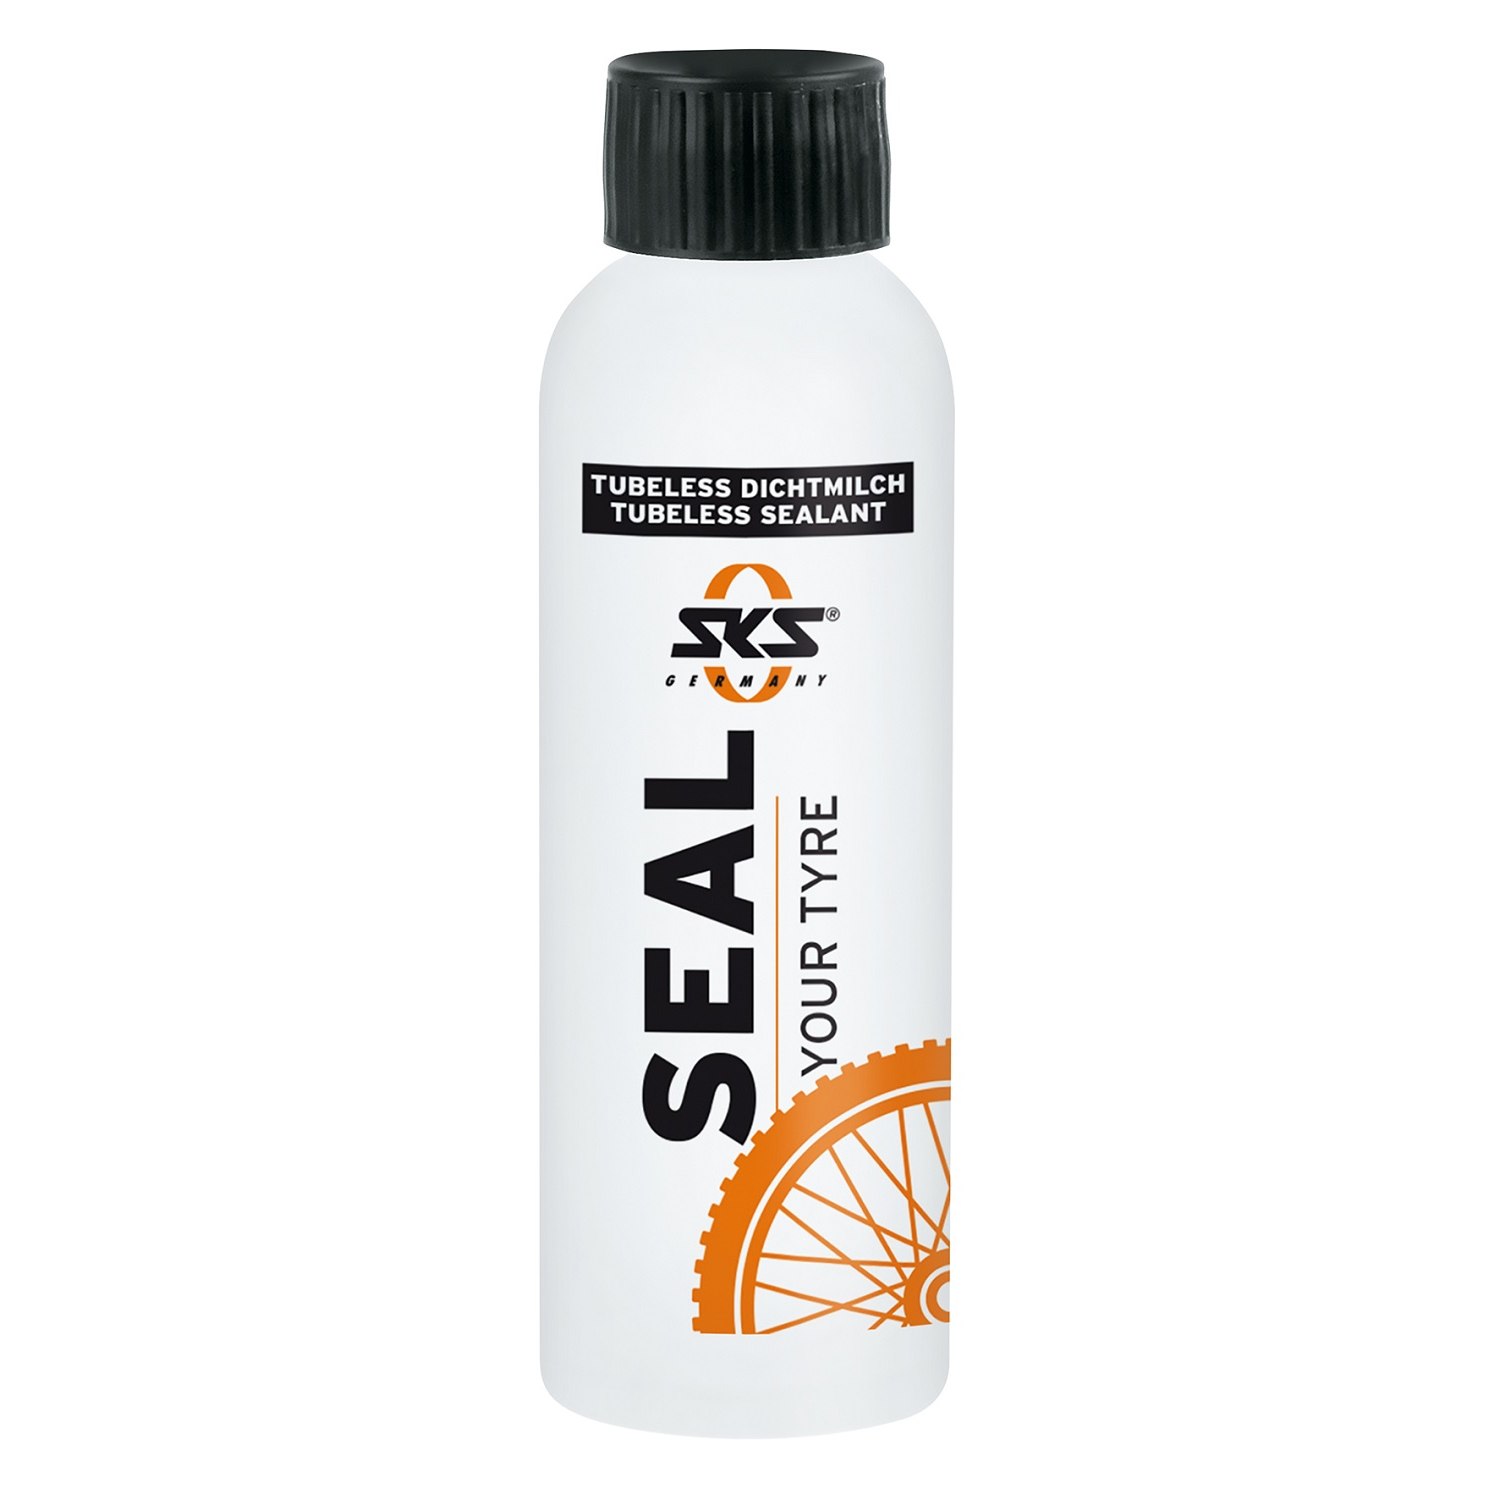 Produktbild von SKS Seal Your Tyre Tubeless Dichtmilch 500 ml